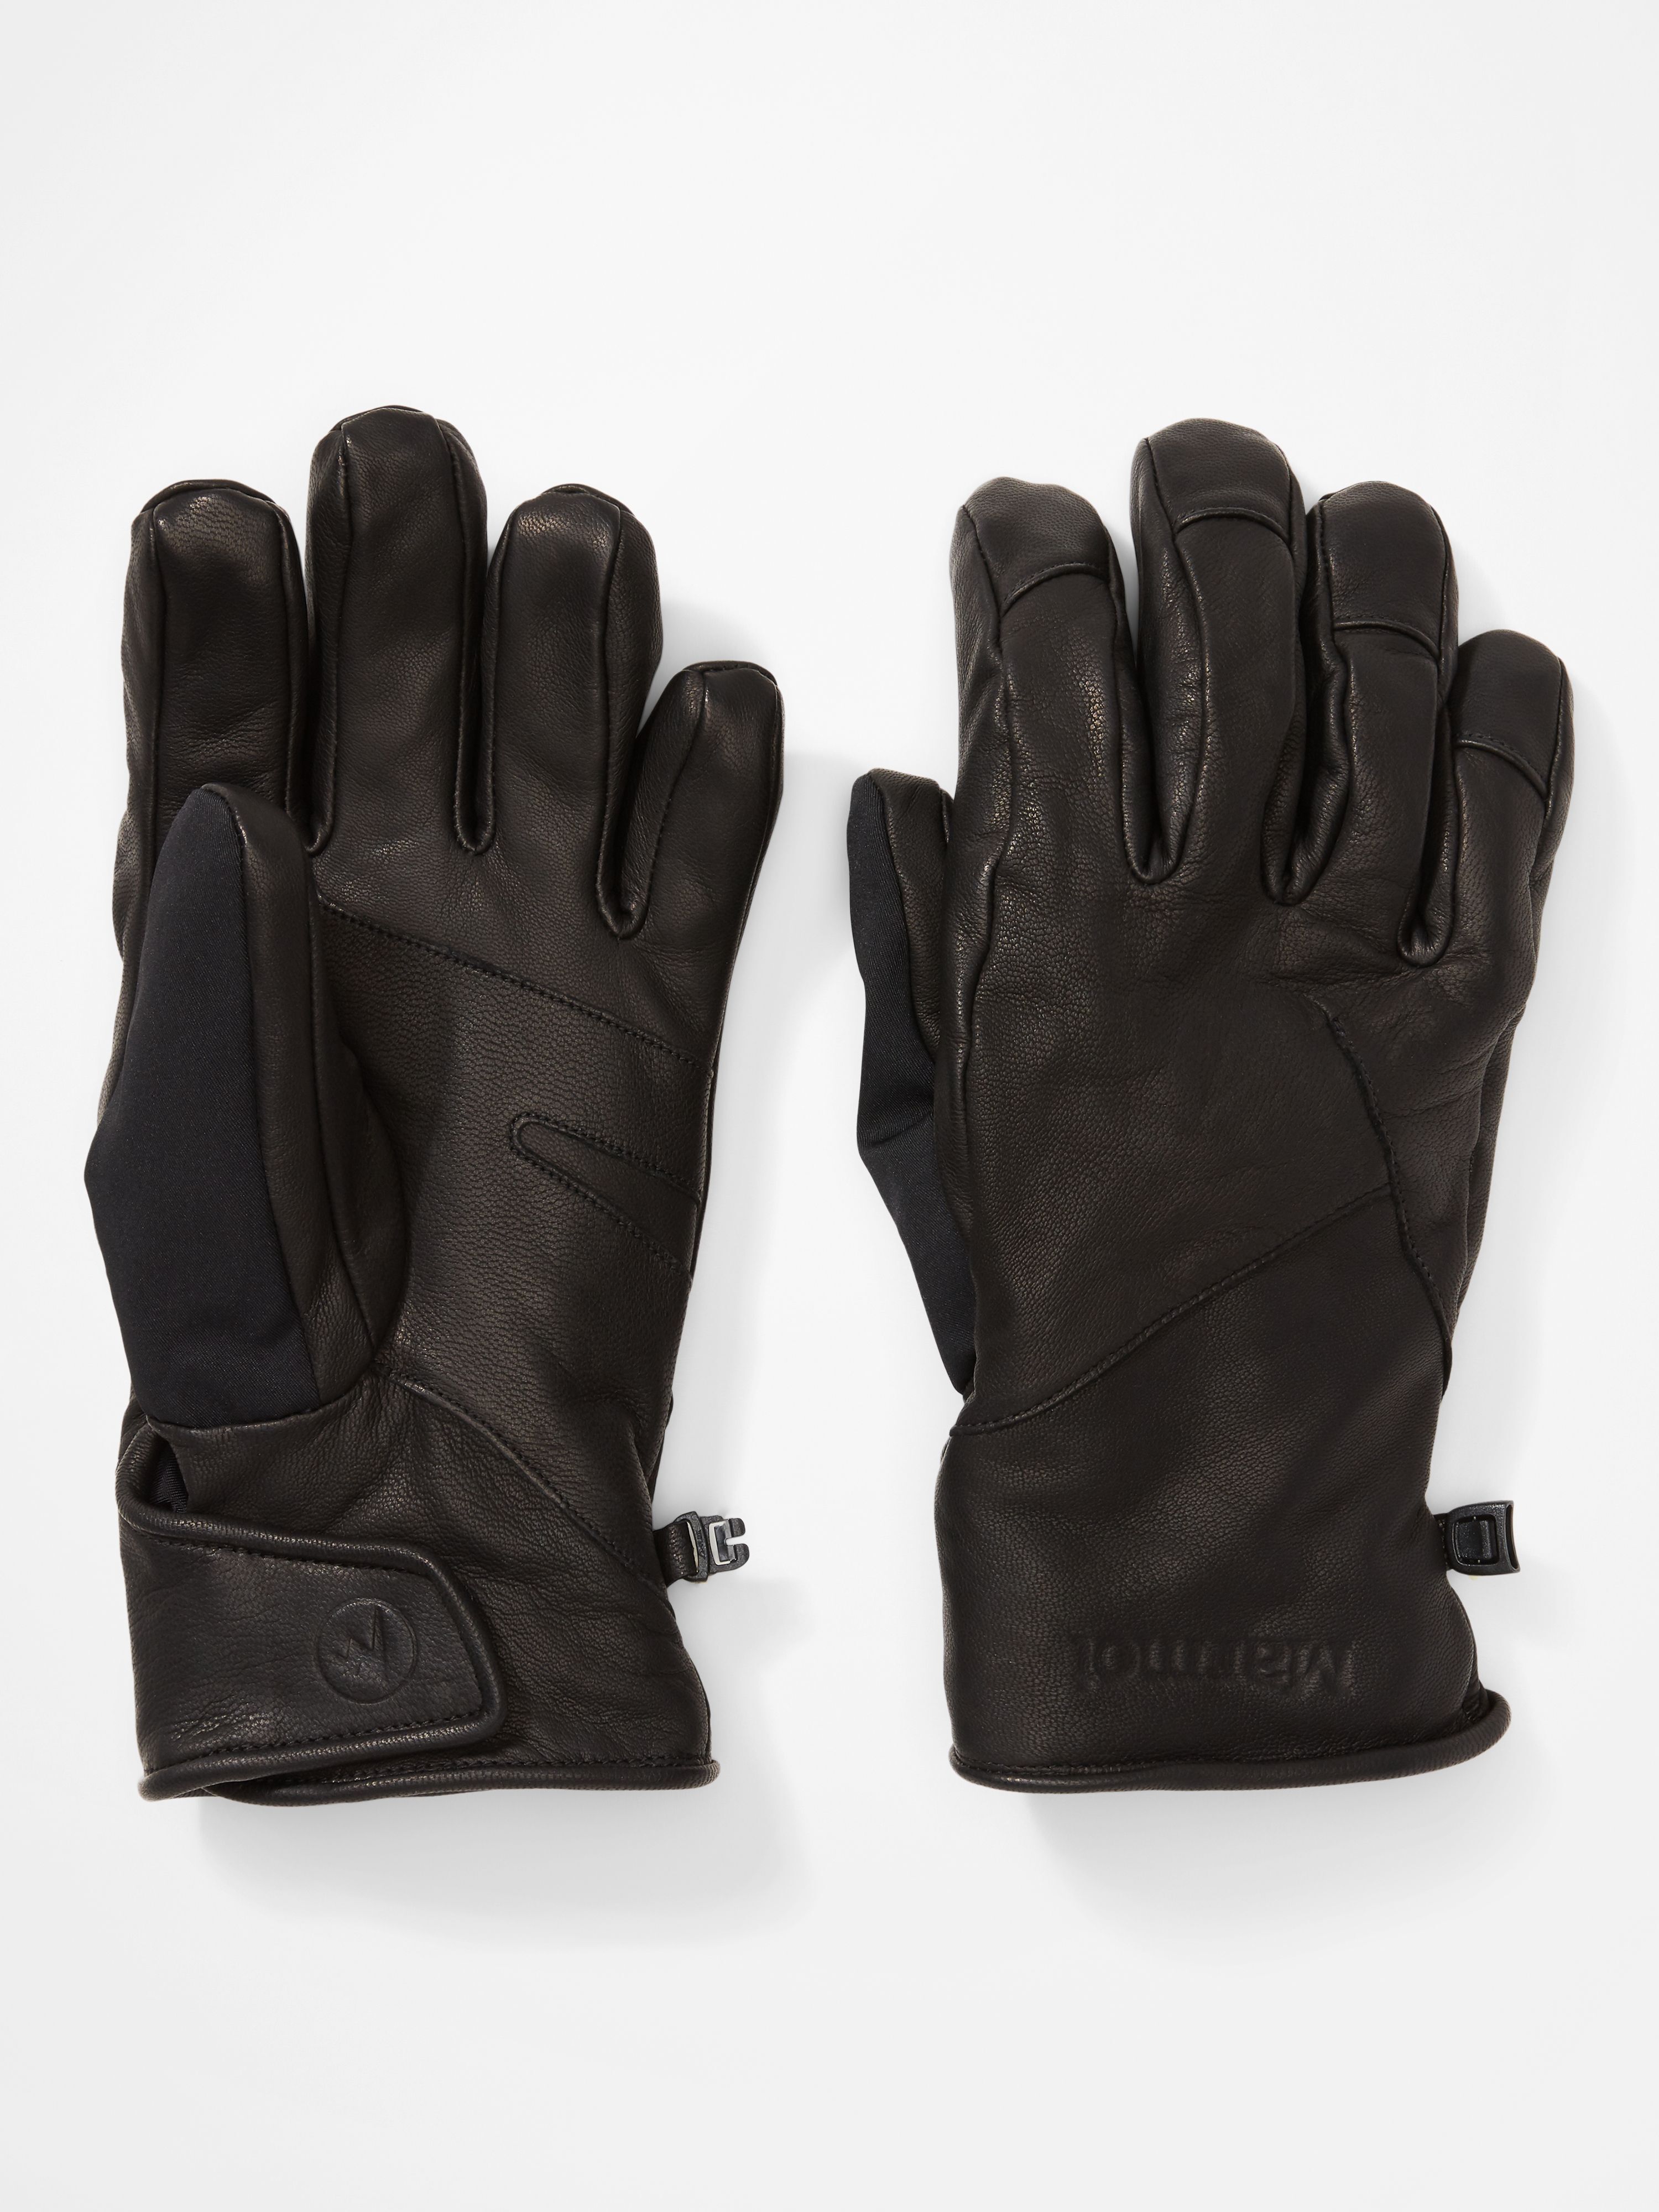 Marmot Dragtooth Undercuff Glove - Ski gloves